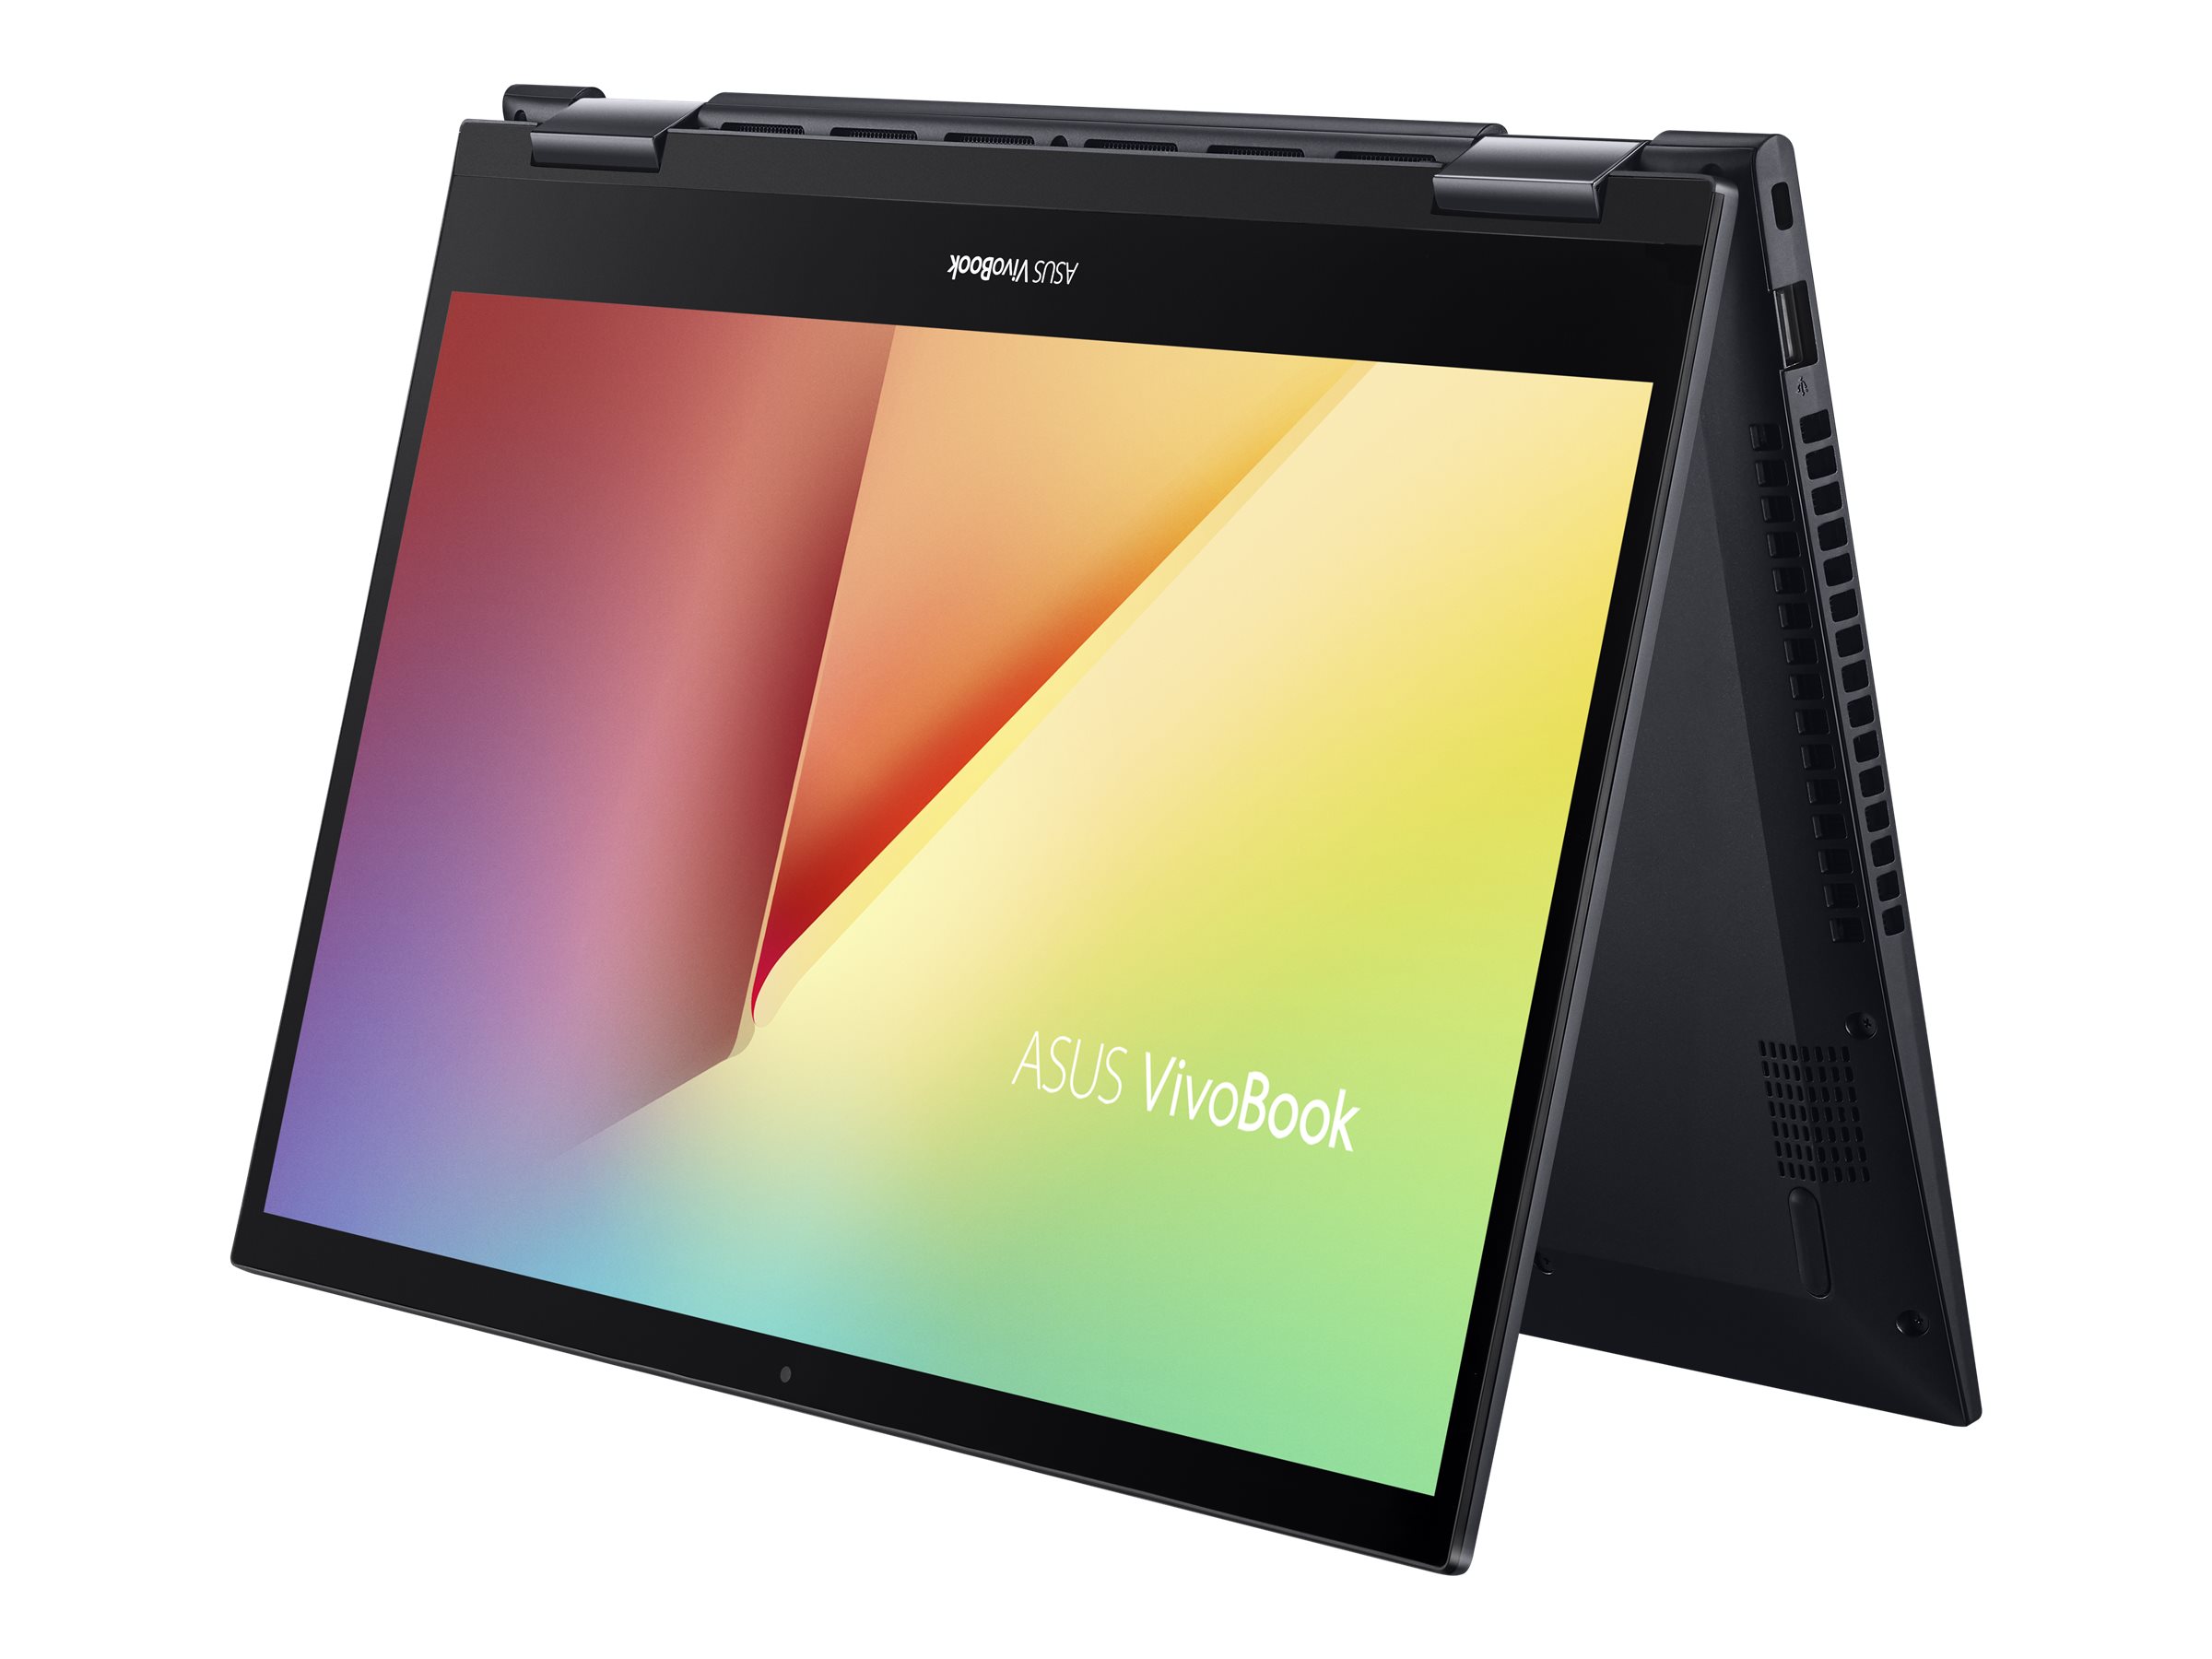 ASUS VivoBook Flip 14 Laptop 14 Inch - 8 GB RAM - 512 GB SSD - AMD Ryzen 5 - Radeon Graphics - TM420UA-DS59T